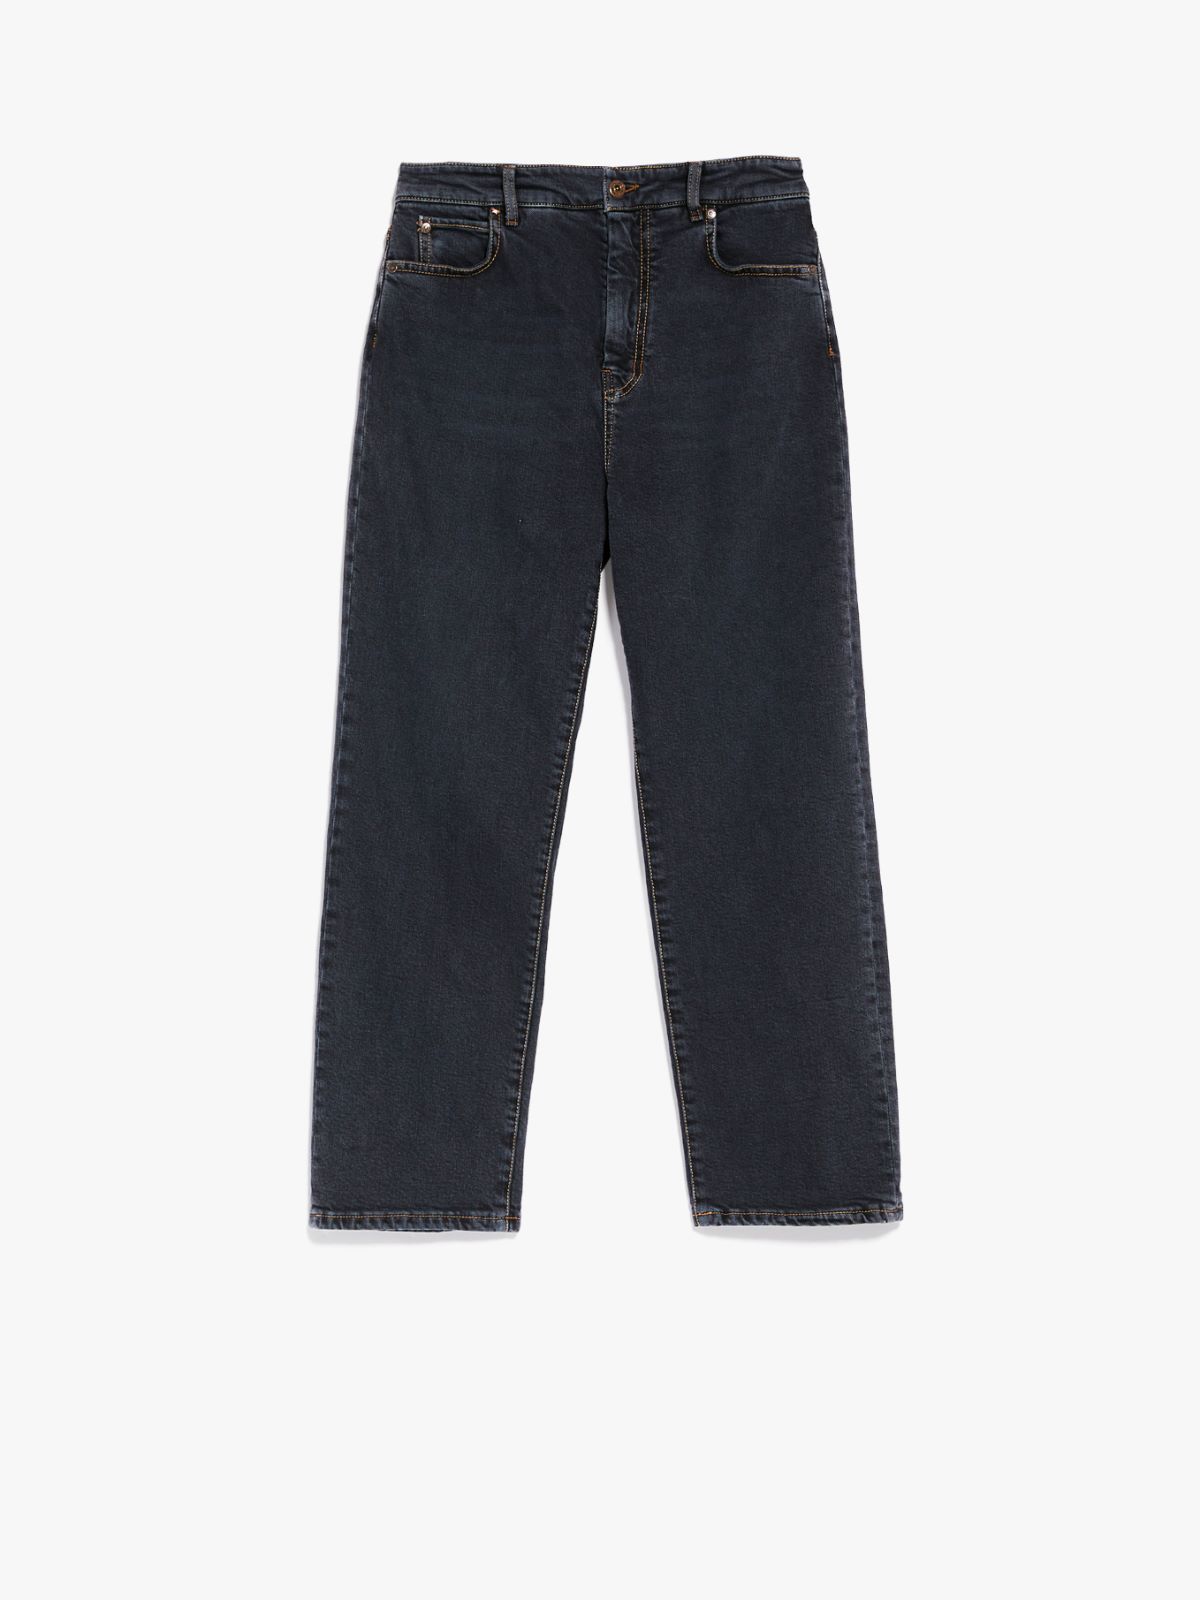 Cotton denim jeans - BLACK - Weekend Max Mara - 5